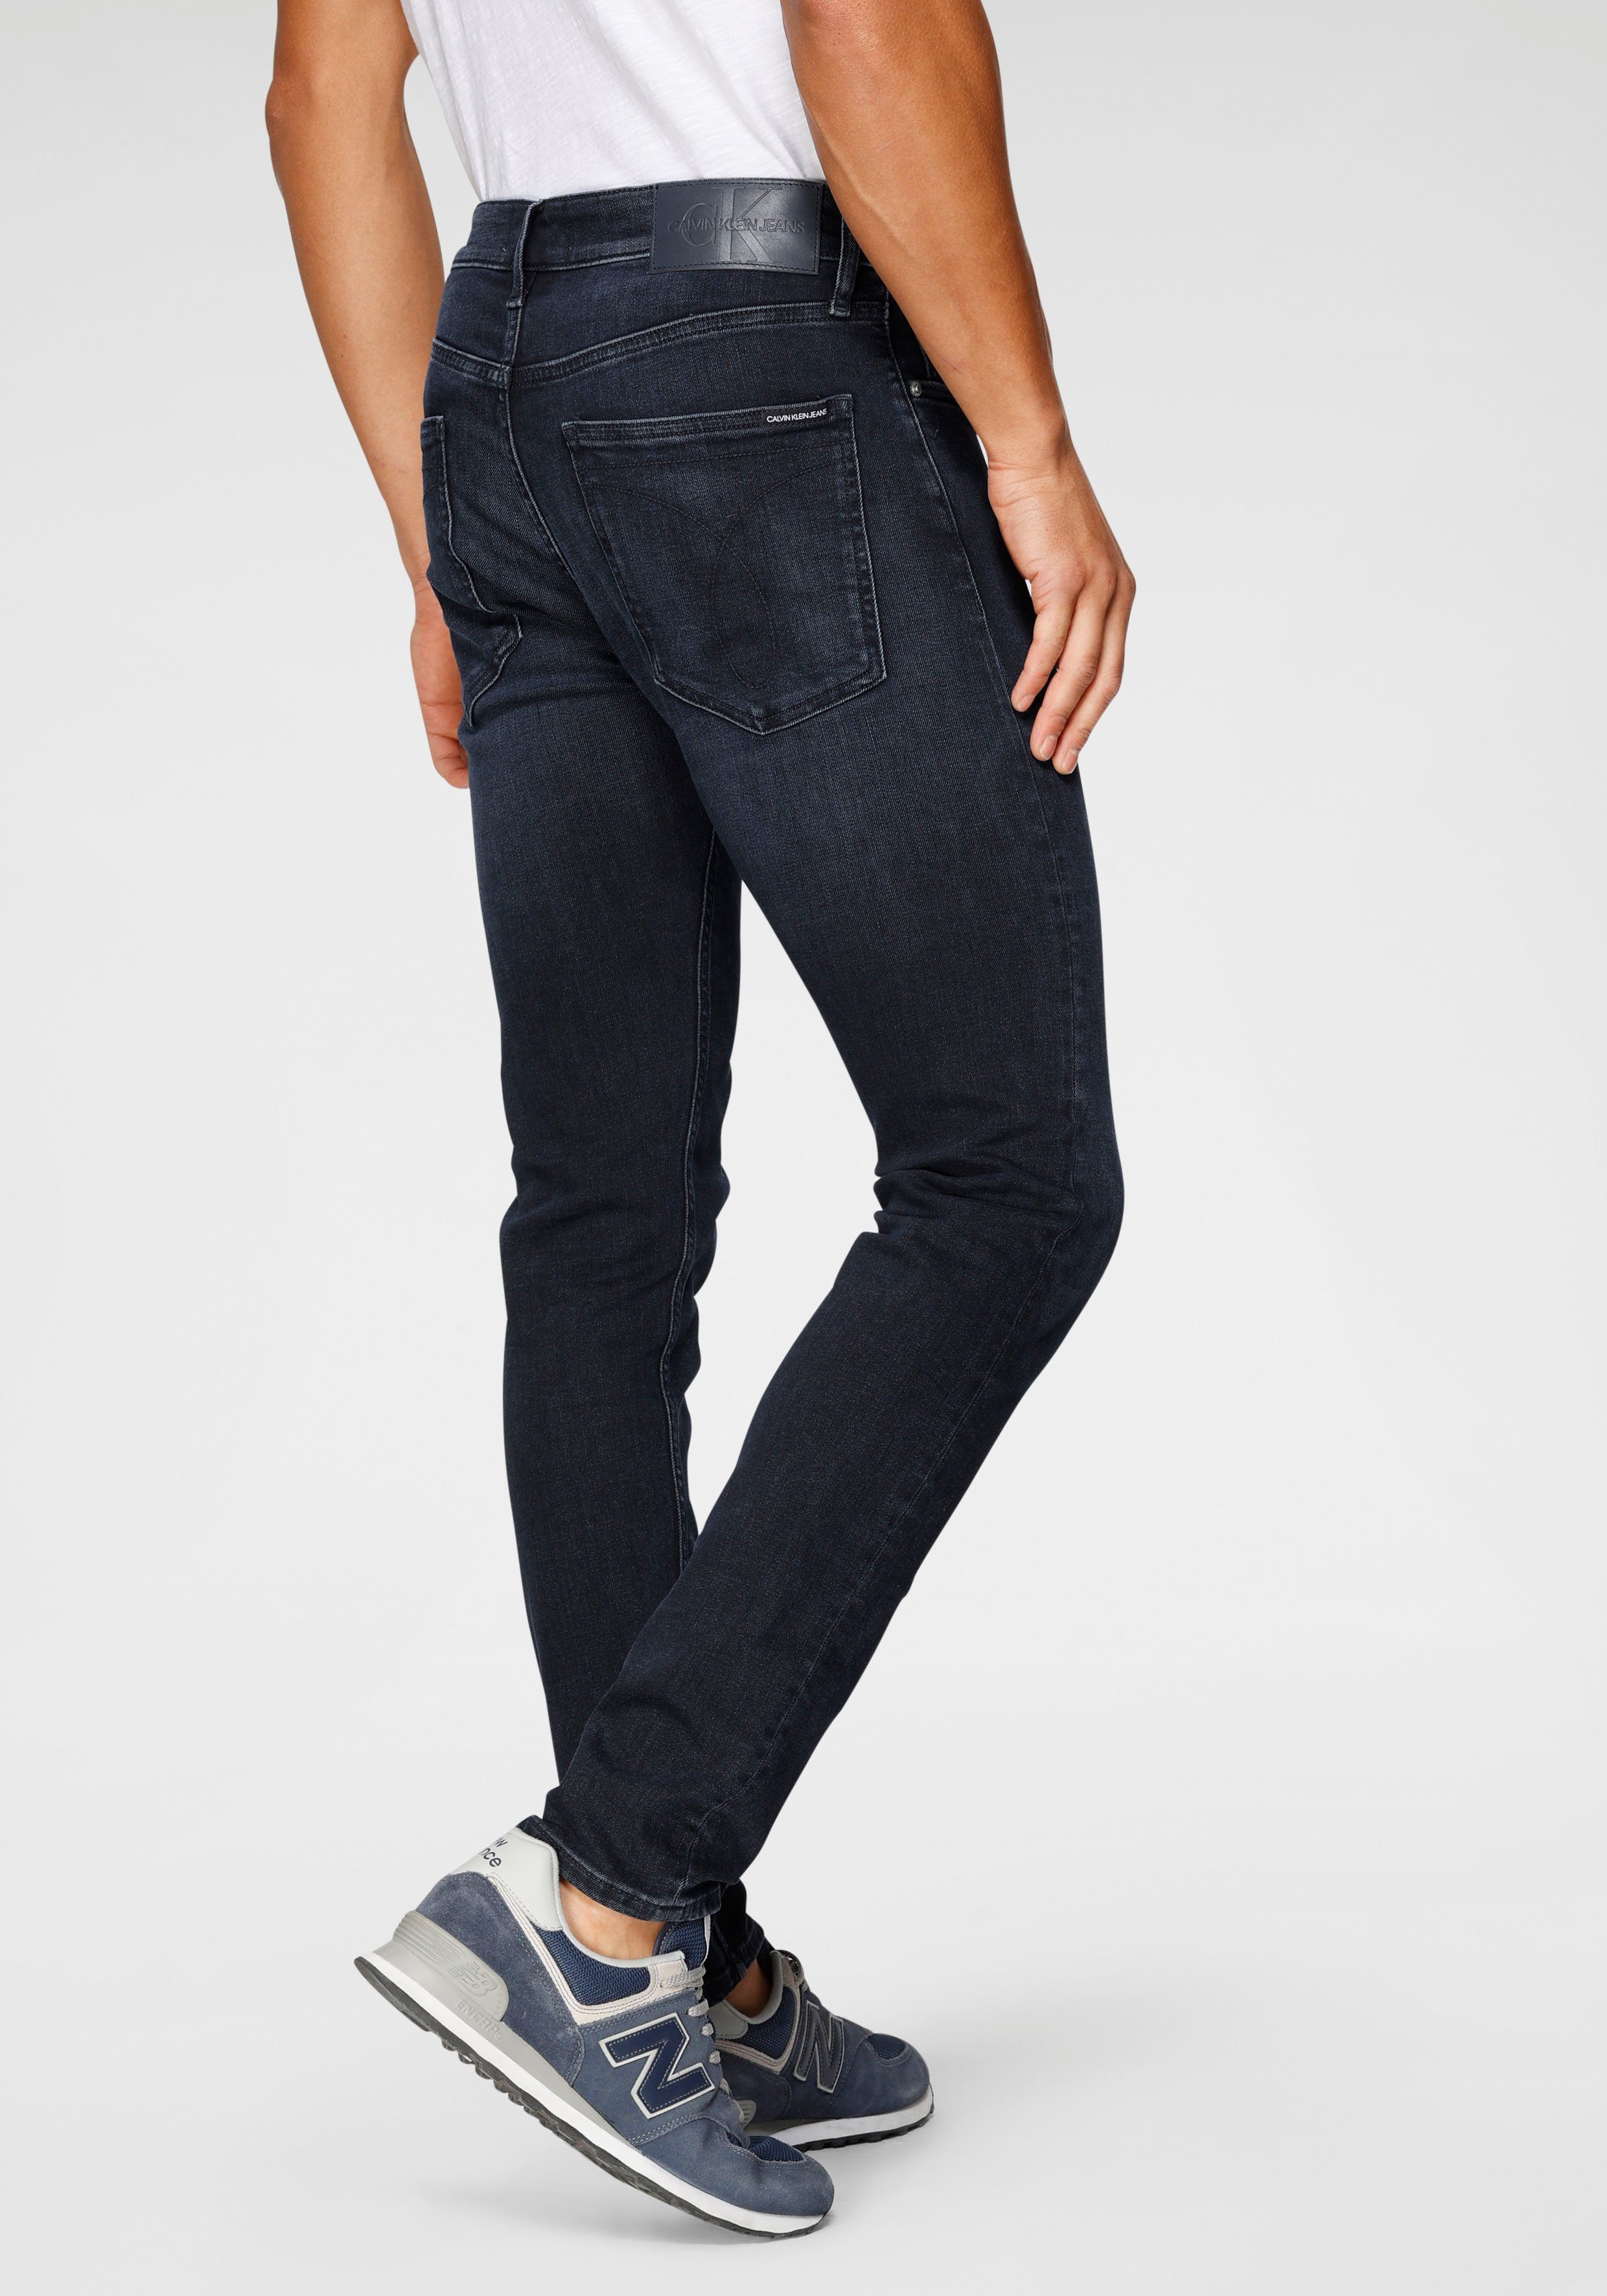 SKINNY Klein 016 Jeans Waschung blue-black CKJ Skinny-fit-Jeans Calvin modische